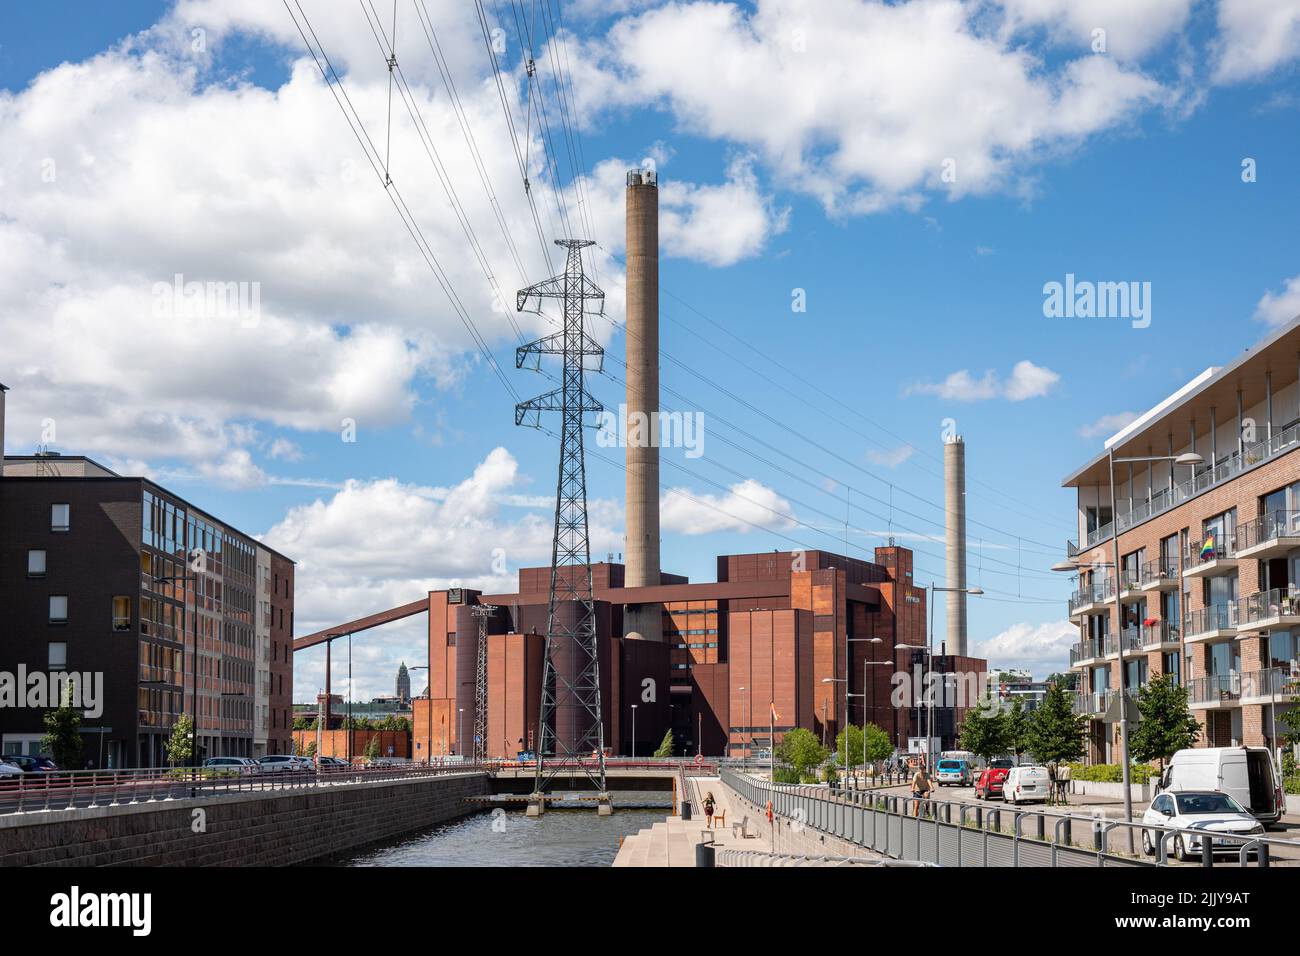 Hanasaari power plant of HELEN or Helsingin Energia with Sompasaari district on left and Kalasatama district on right in Helsinki, Finland Stock Photo